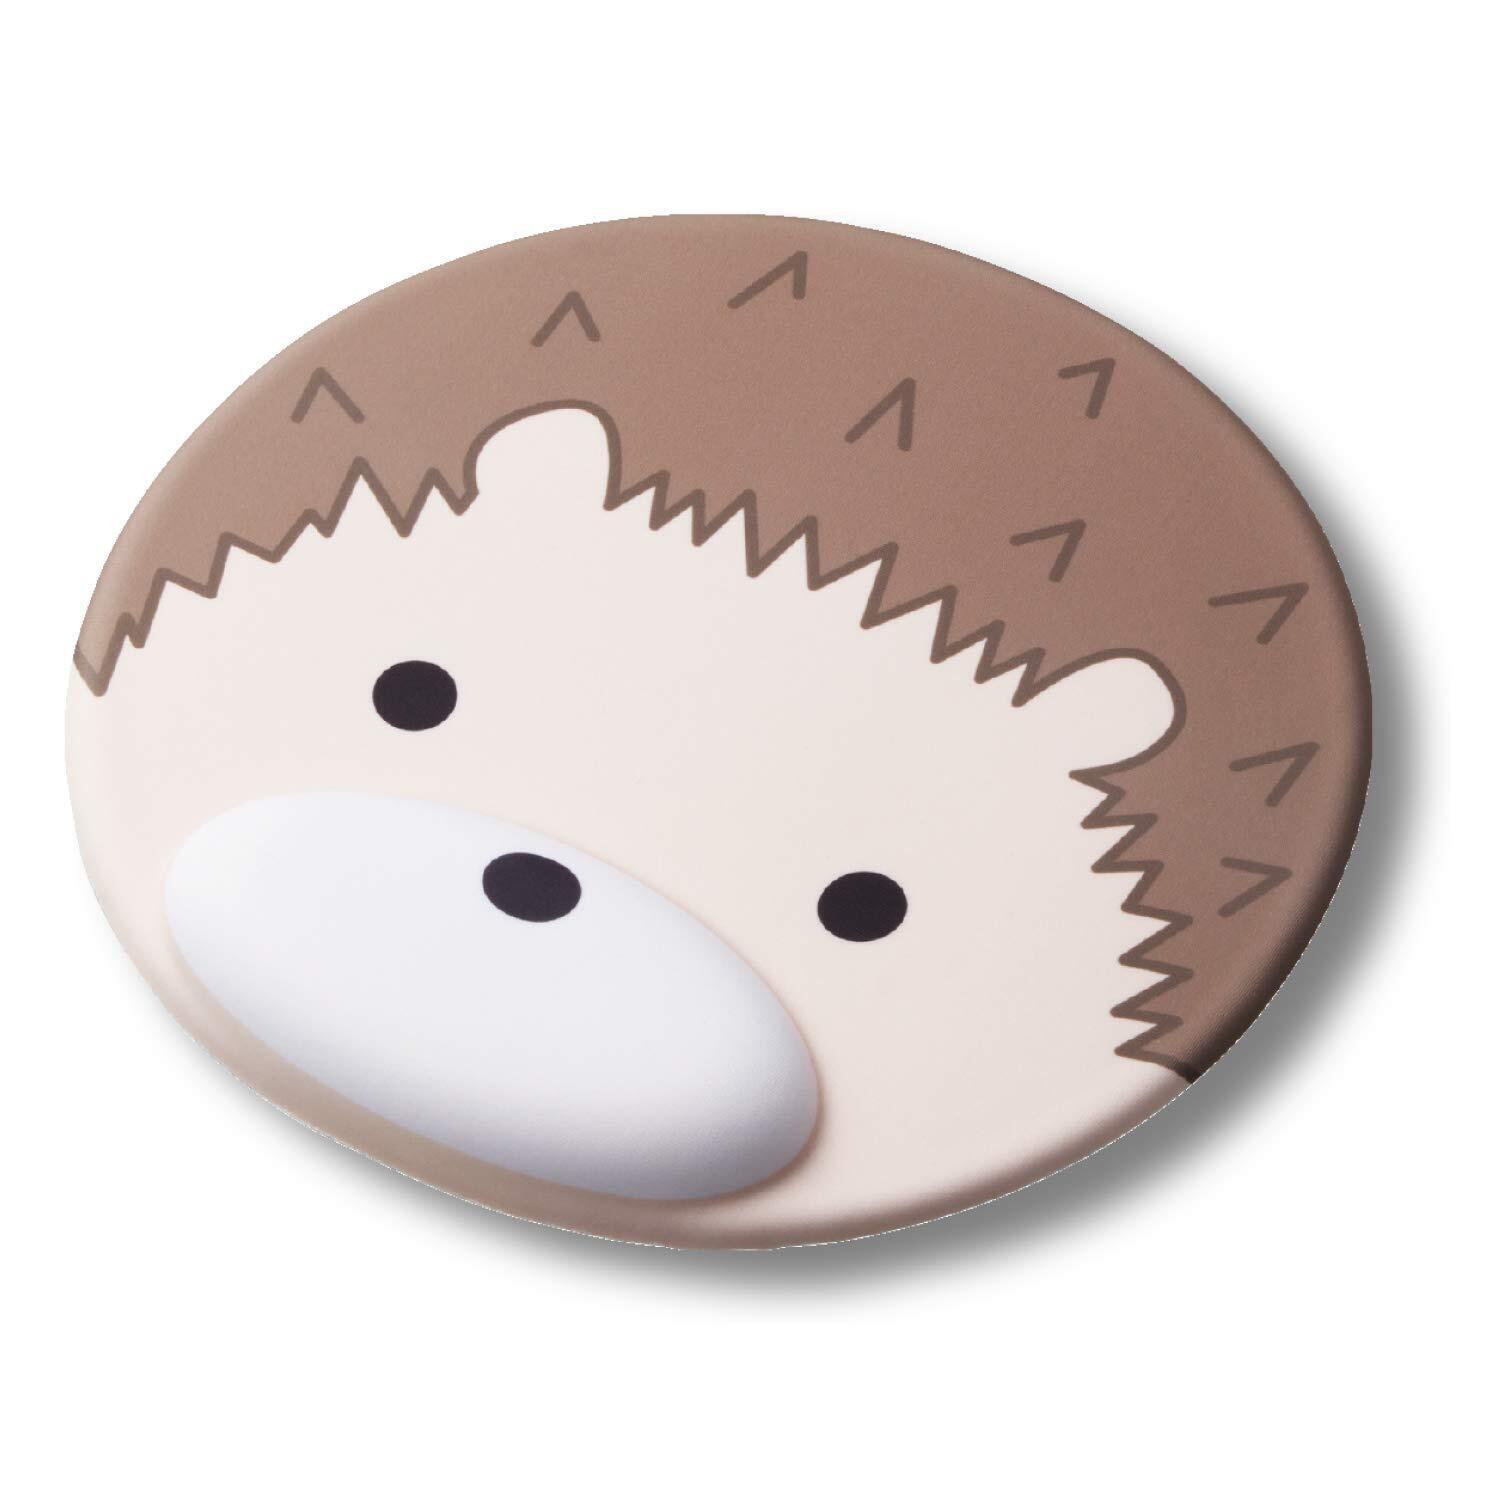 Elecom Mouse Pad Wrist Rest Animal Animal Face Makes Your Desk Cute Hedgehog MP-